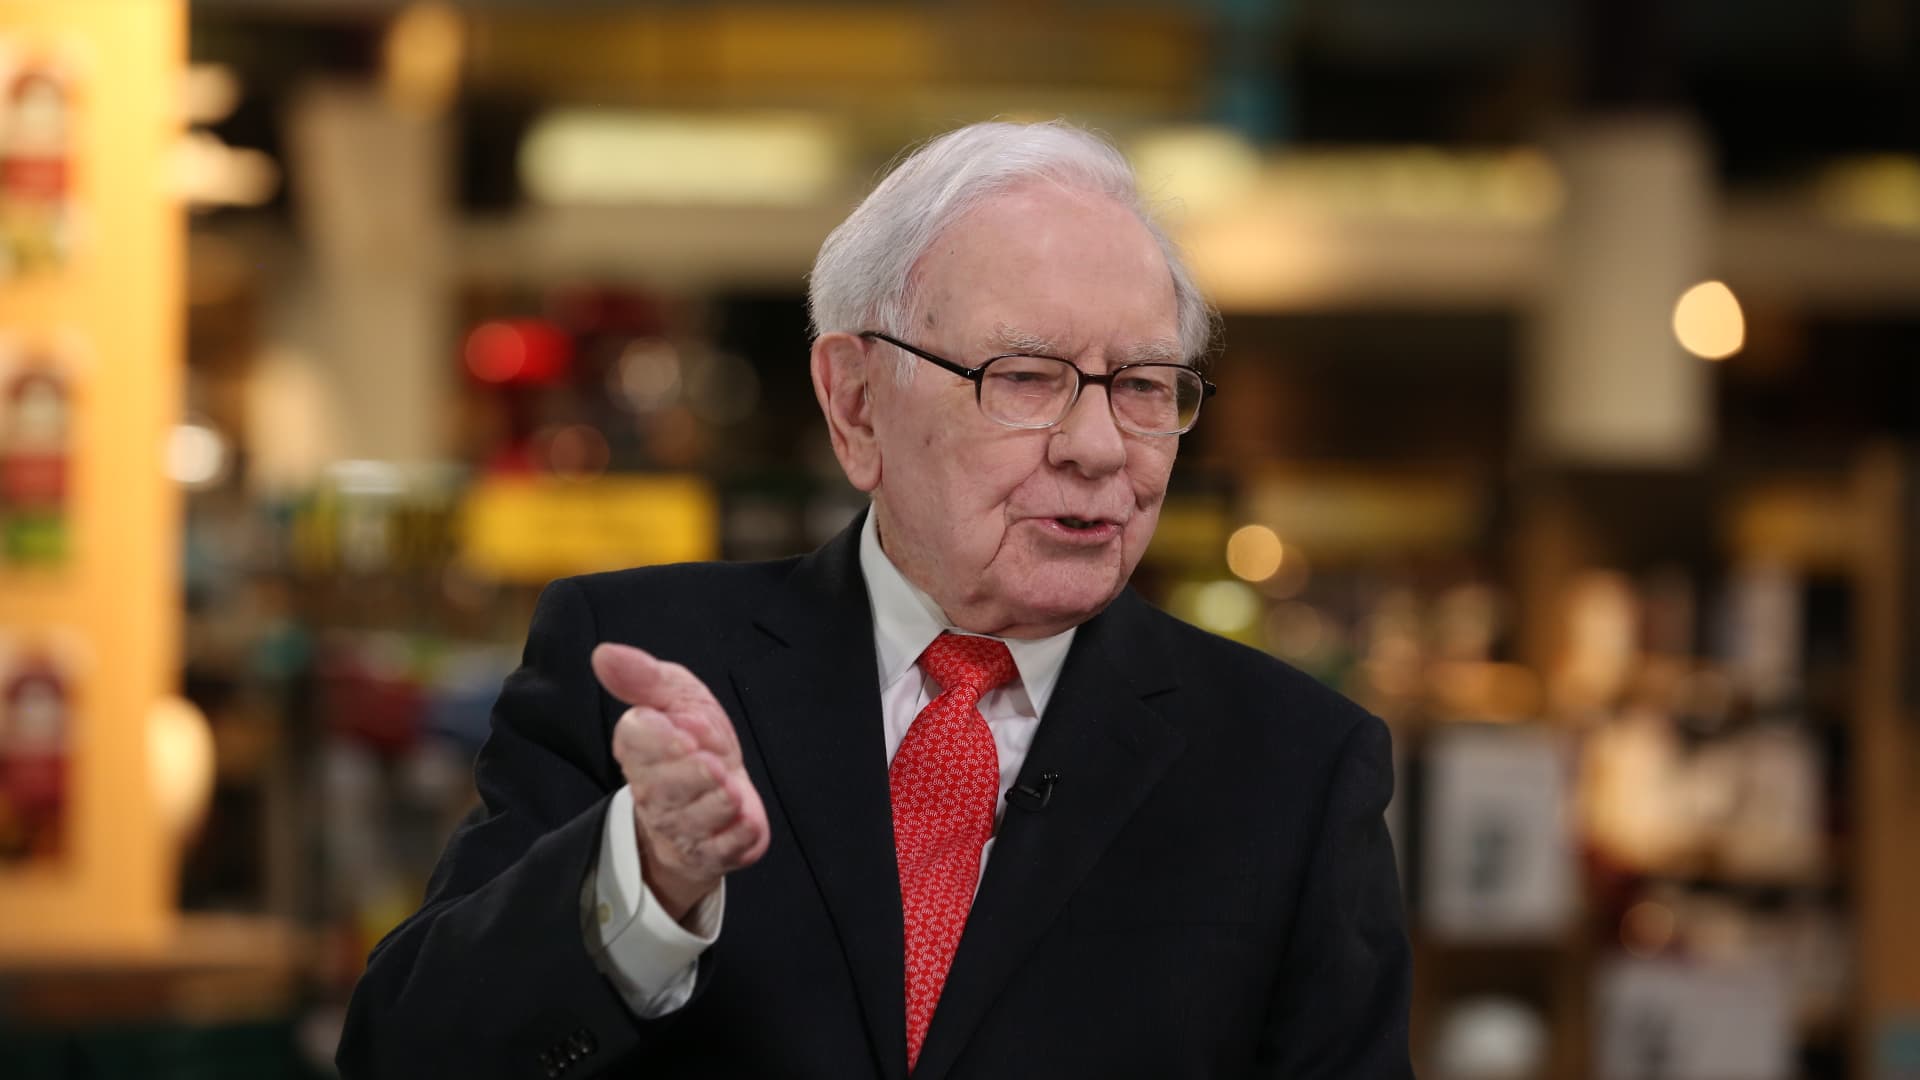 Warren Buffett, Chairman and CEO of Berkshire Hathaway.